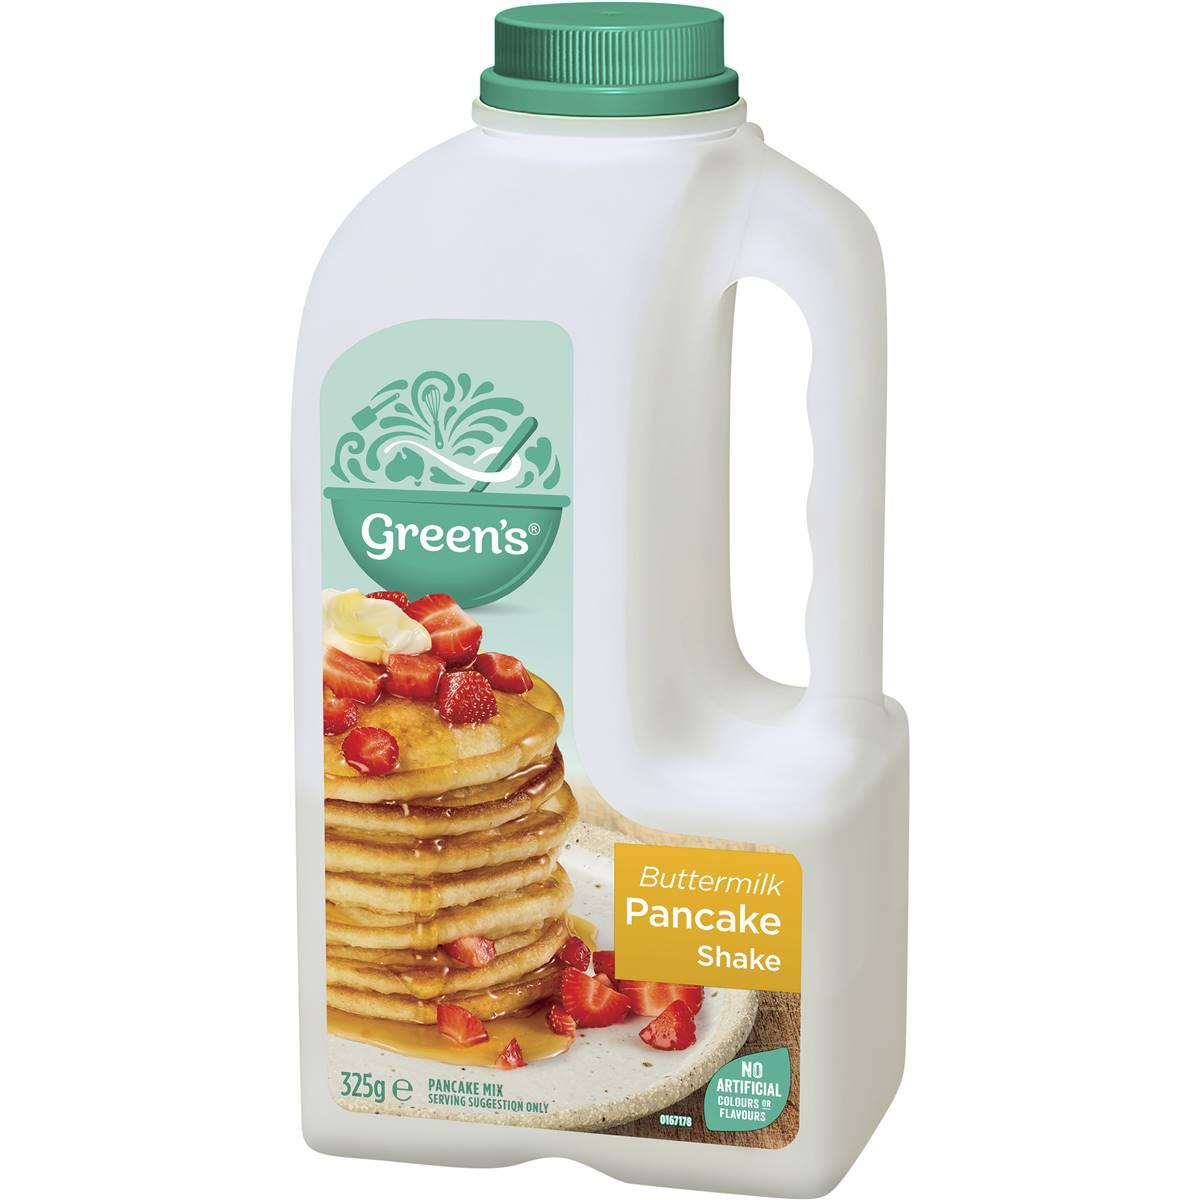 Green's Pancake Mix Buttermilk Shake 325g